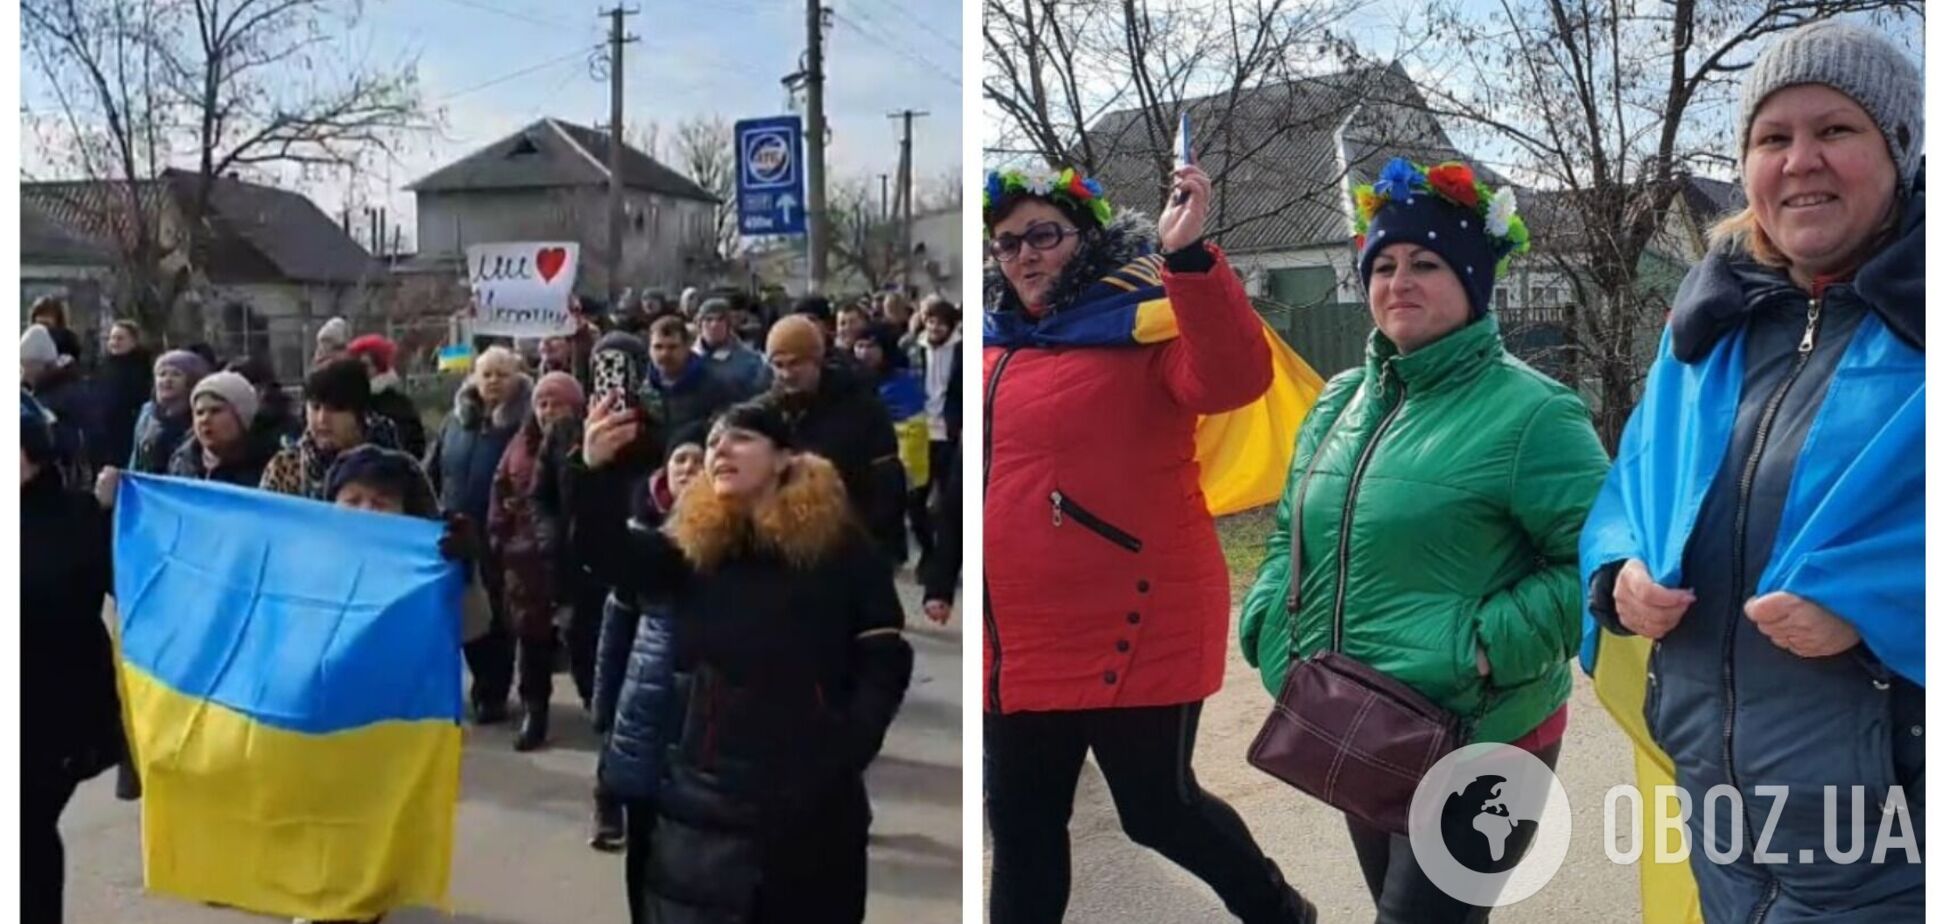 На Херсонщине люди с украинскими флагами вышли на митинг против оккупантов. Фото и видео